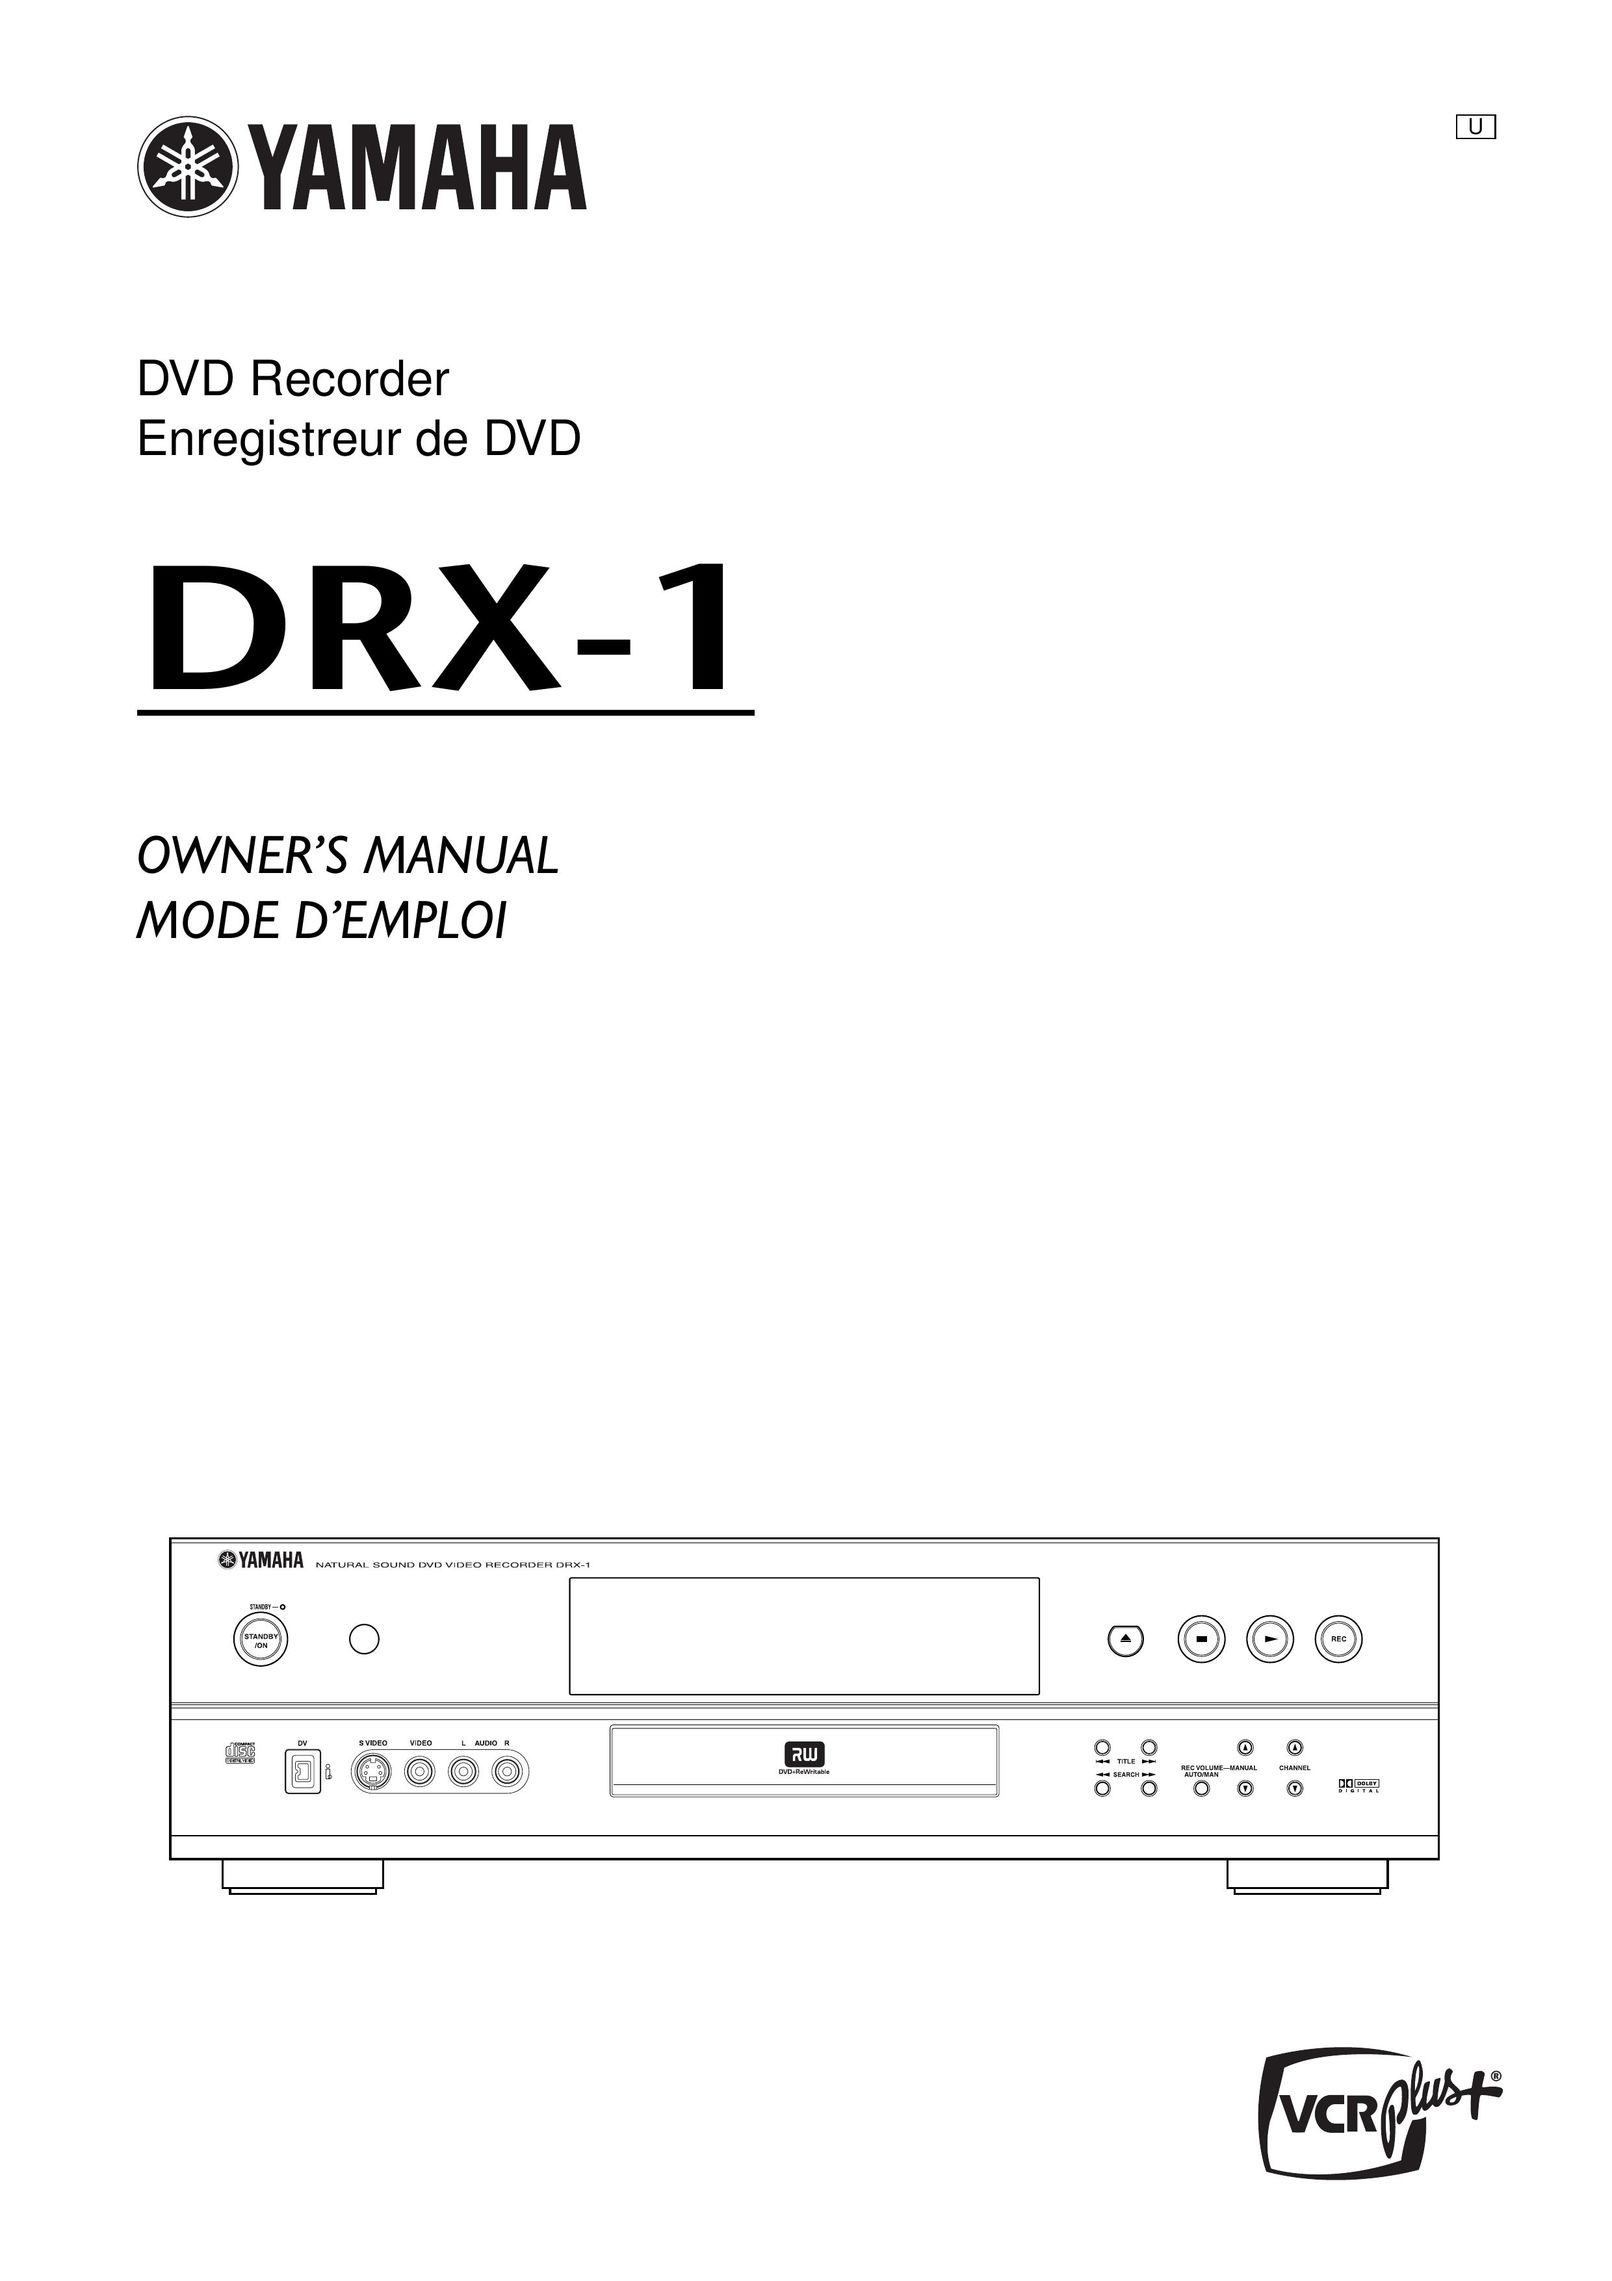 Yamaha DRX-1 DVD Player User Manual